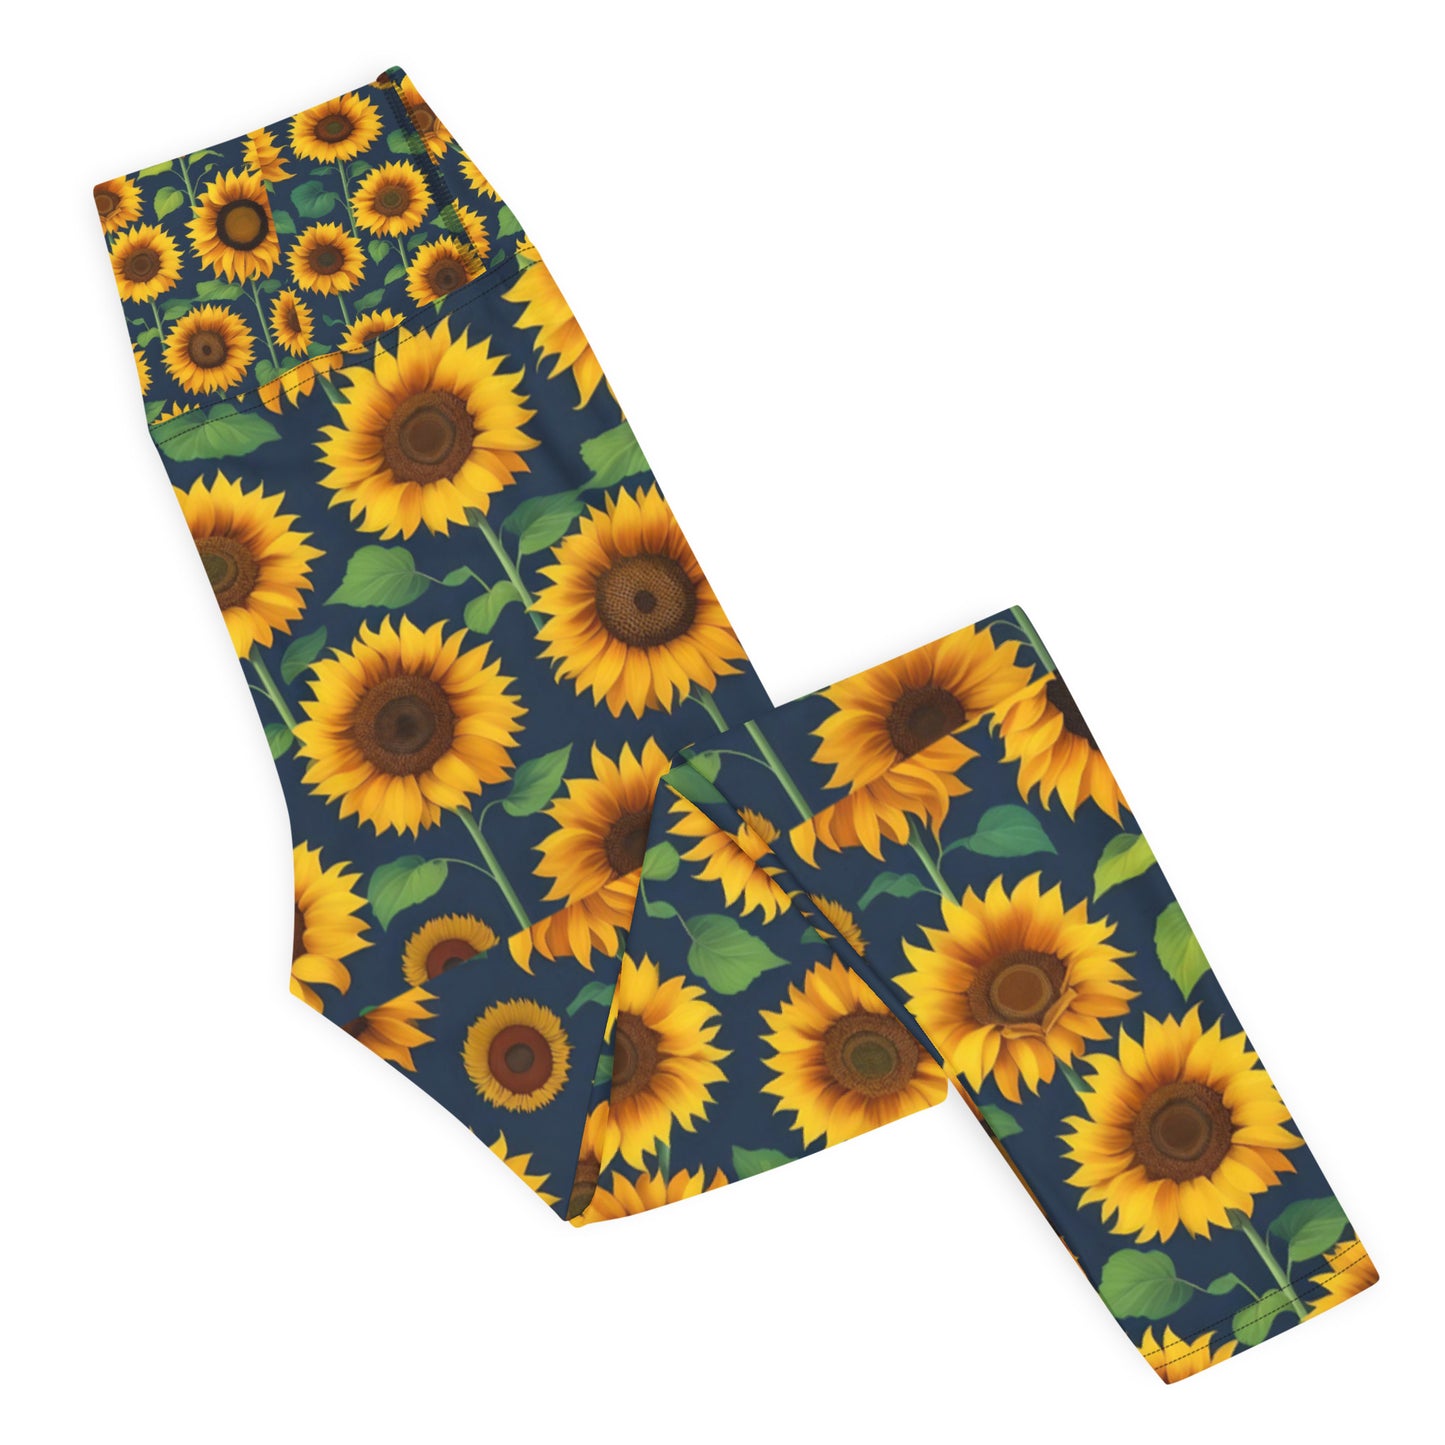 Gorky #DATASS Yoga Pants - Sunflower Summer Edition